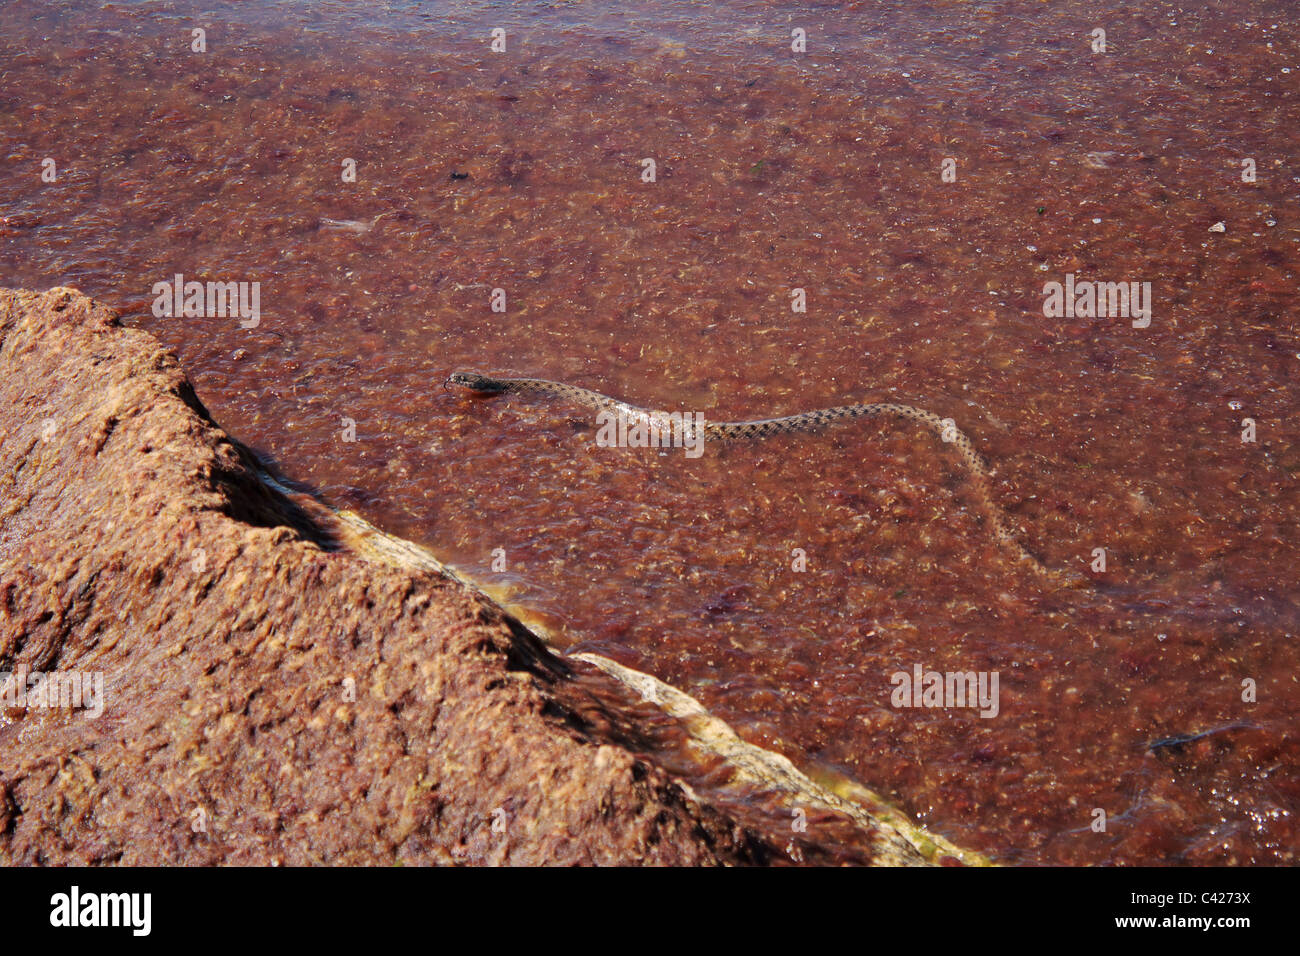 A becco giallo (Caspian) sea snake nuota nel fango. Foto Stock